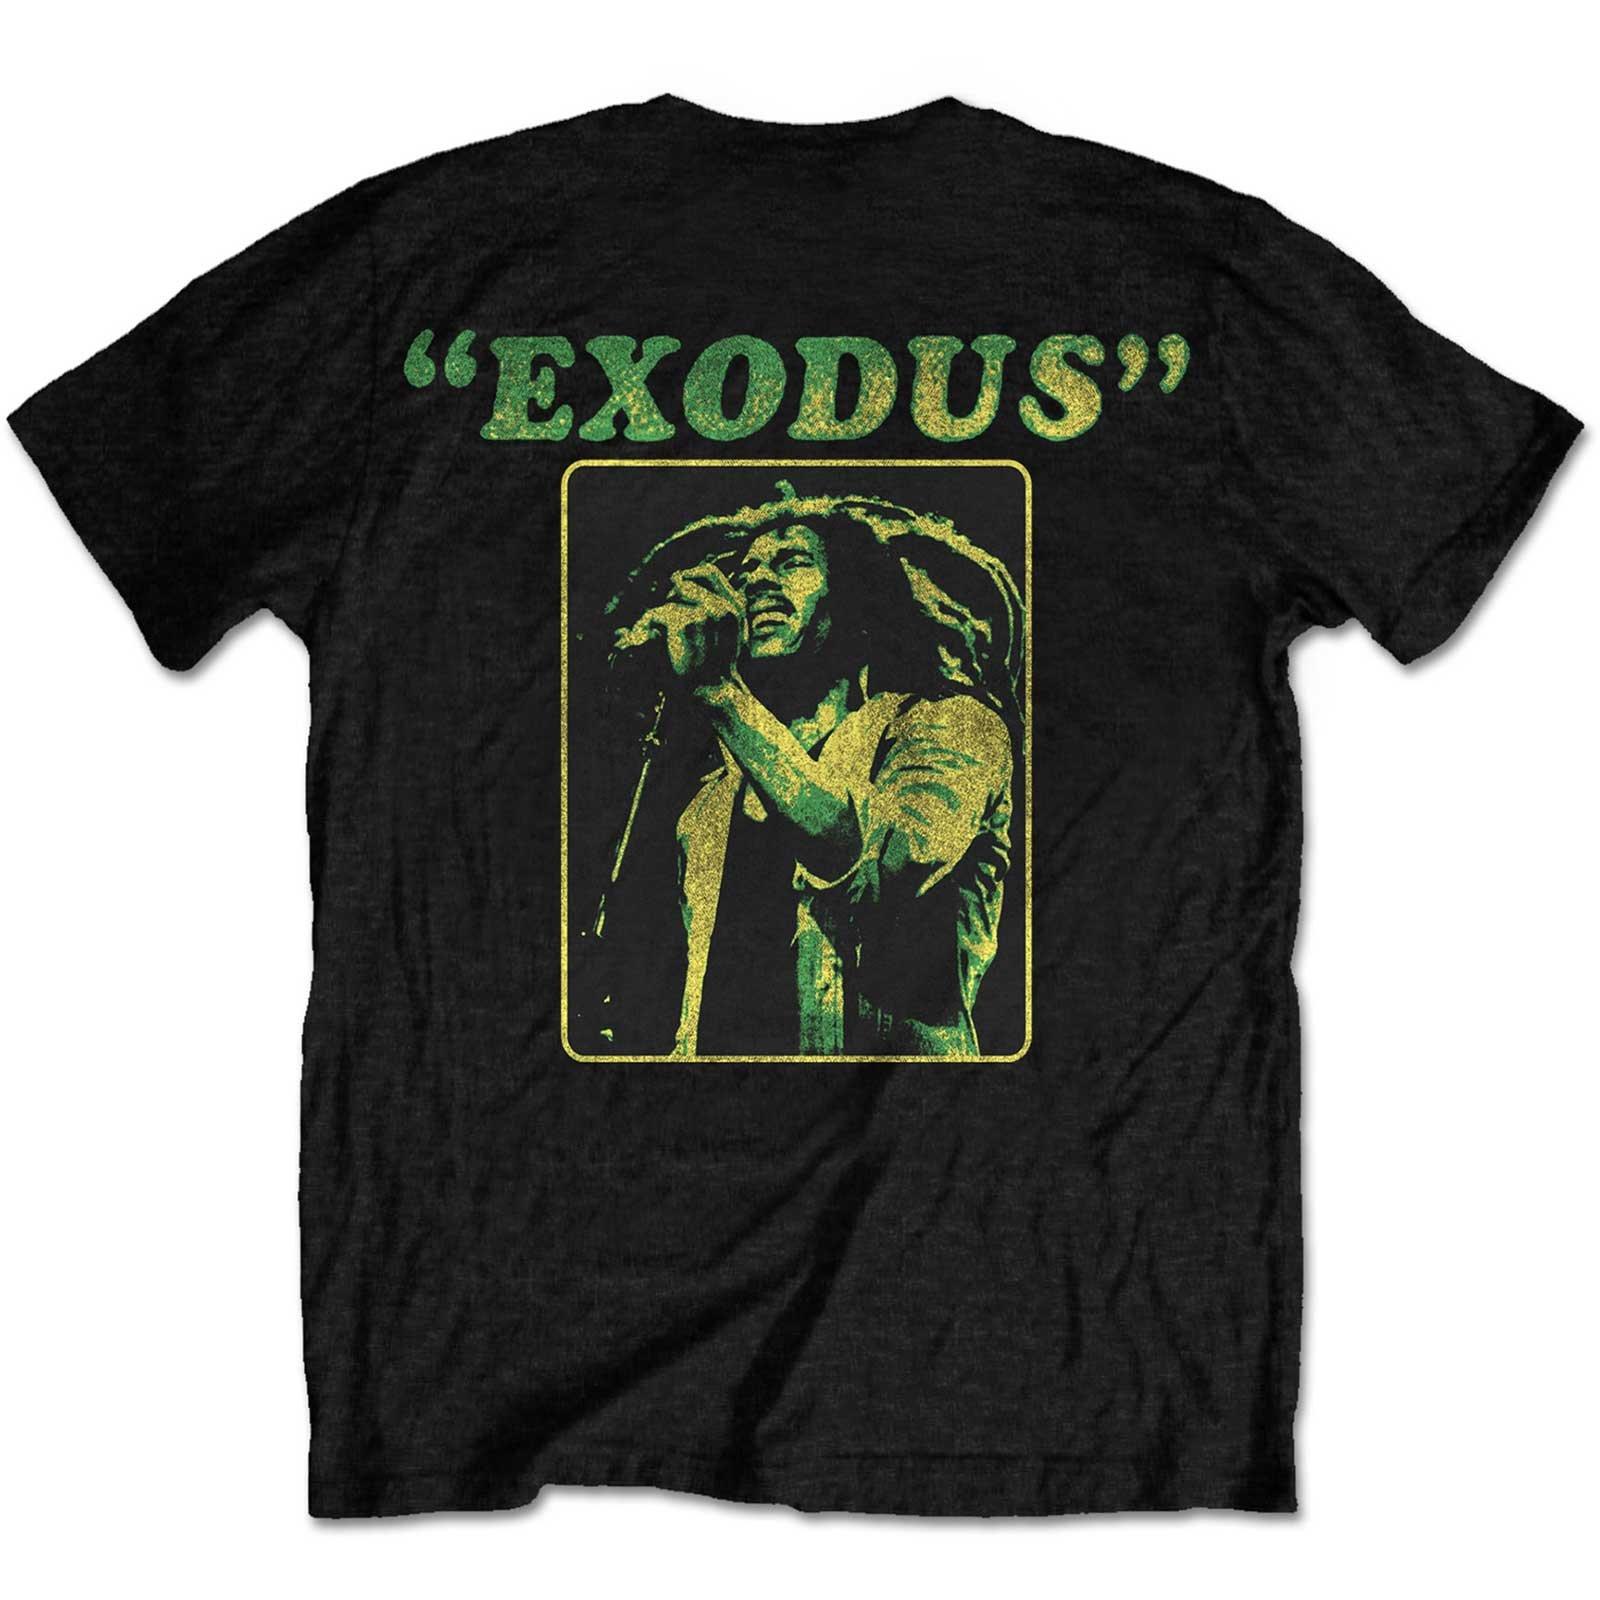 Bob Marley  Tshirt EXODUS 